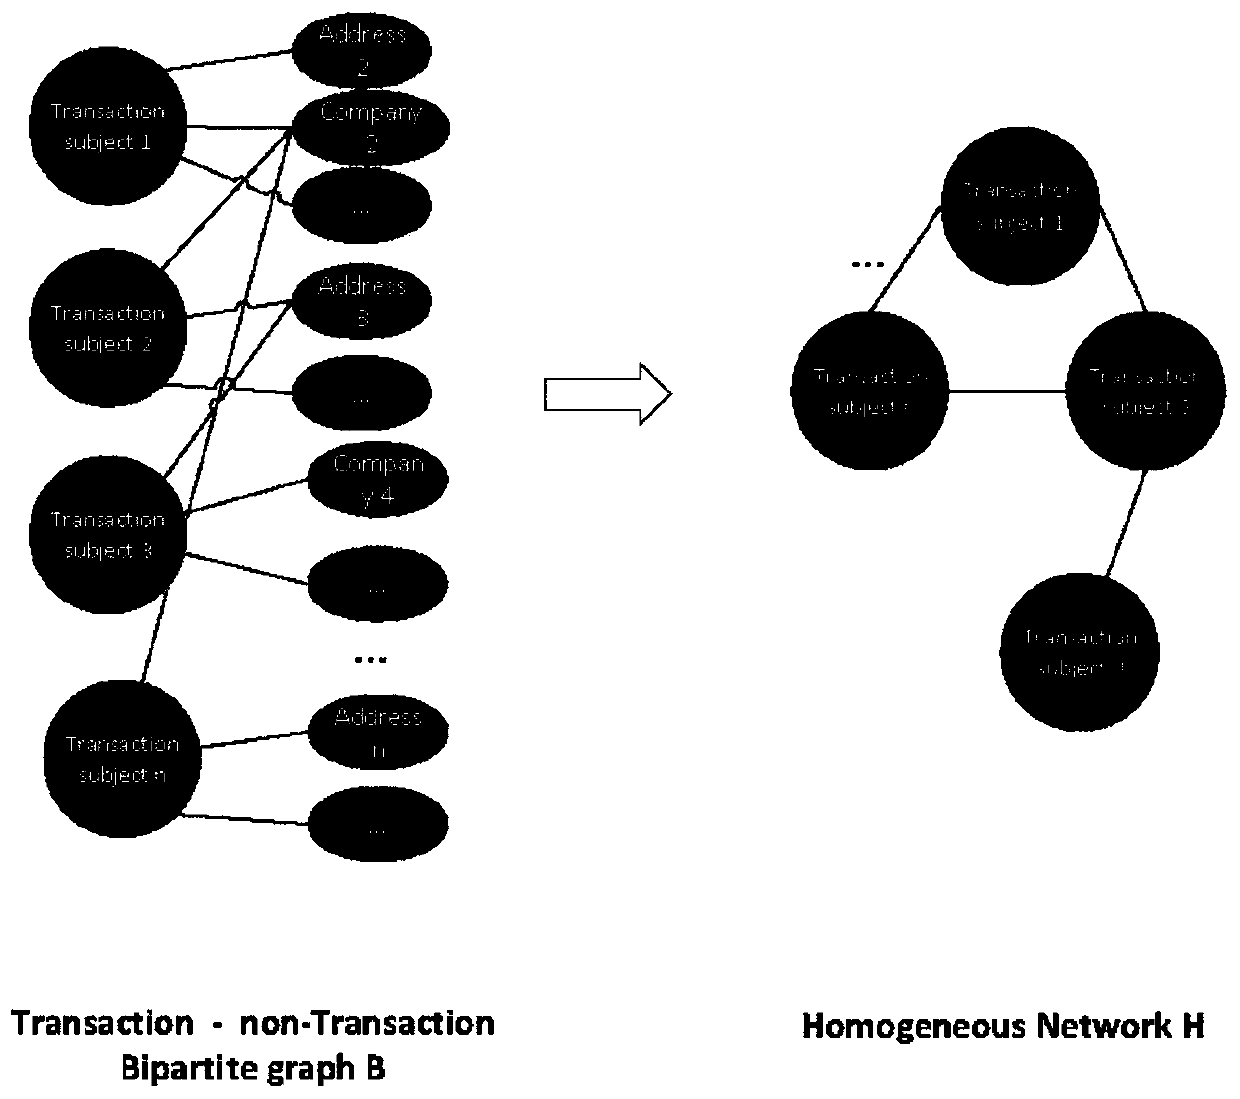 Online transaction fraud detection method based on entity relationship